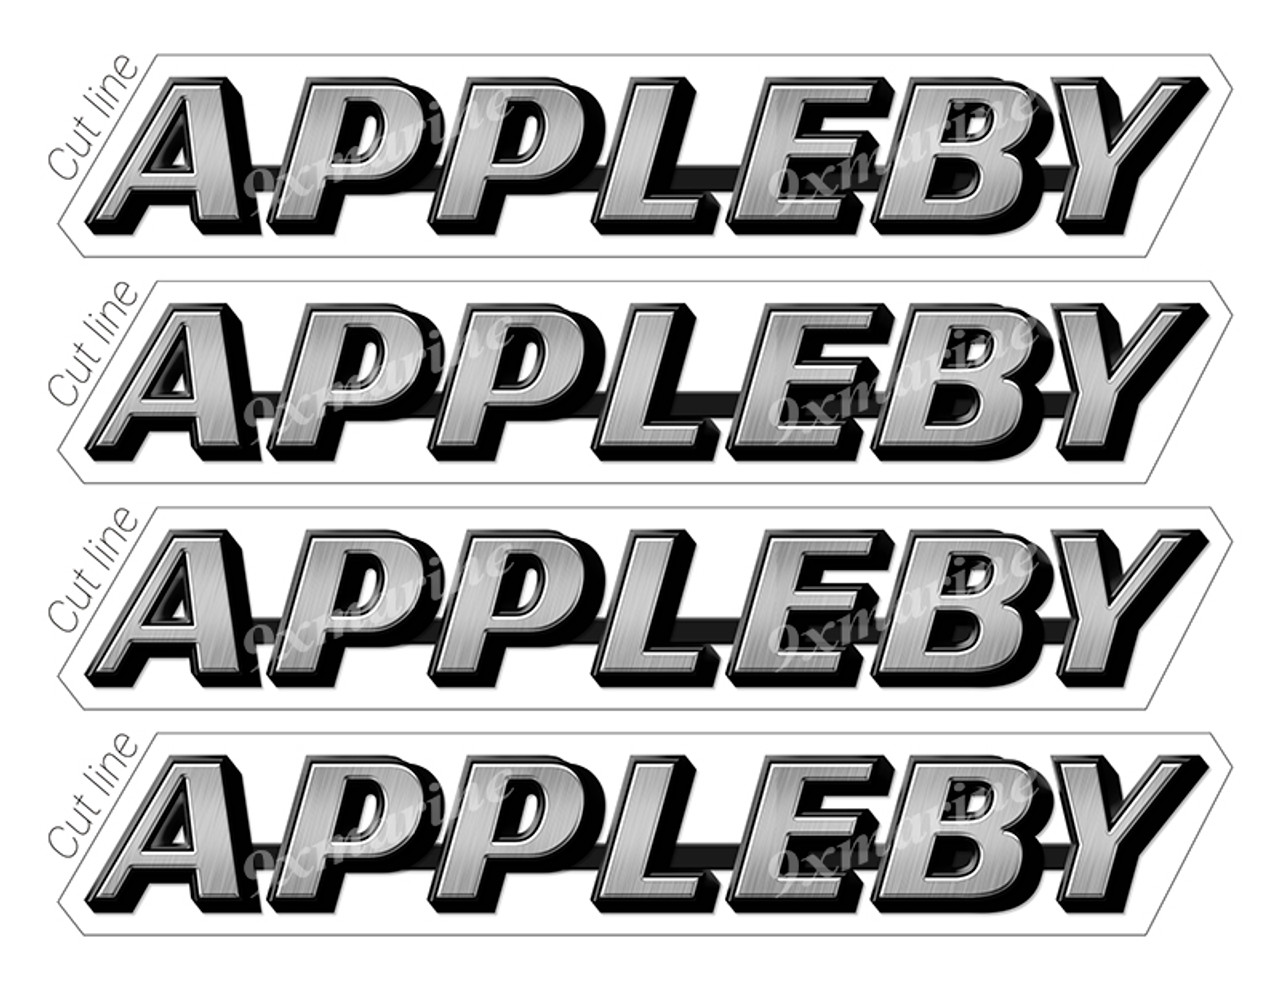 4 Appleby Boat Stickers "3D Vinyl Replica" of original